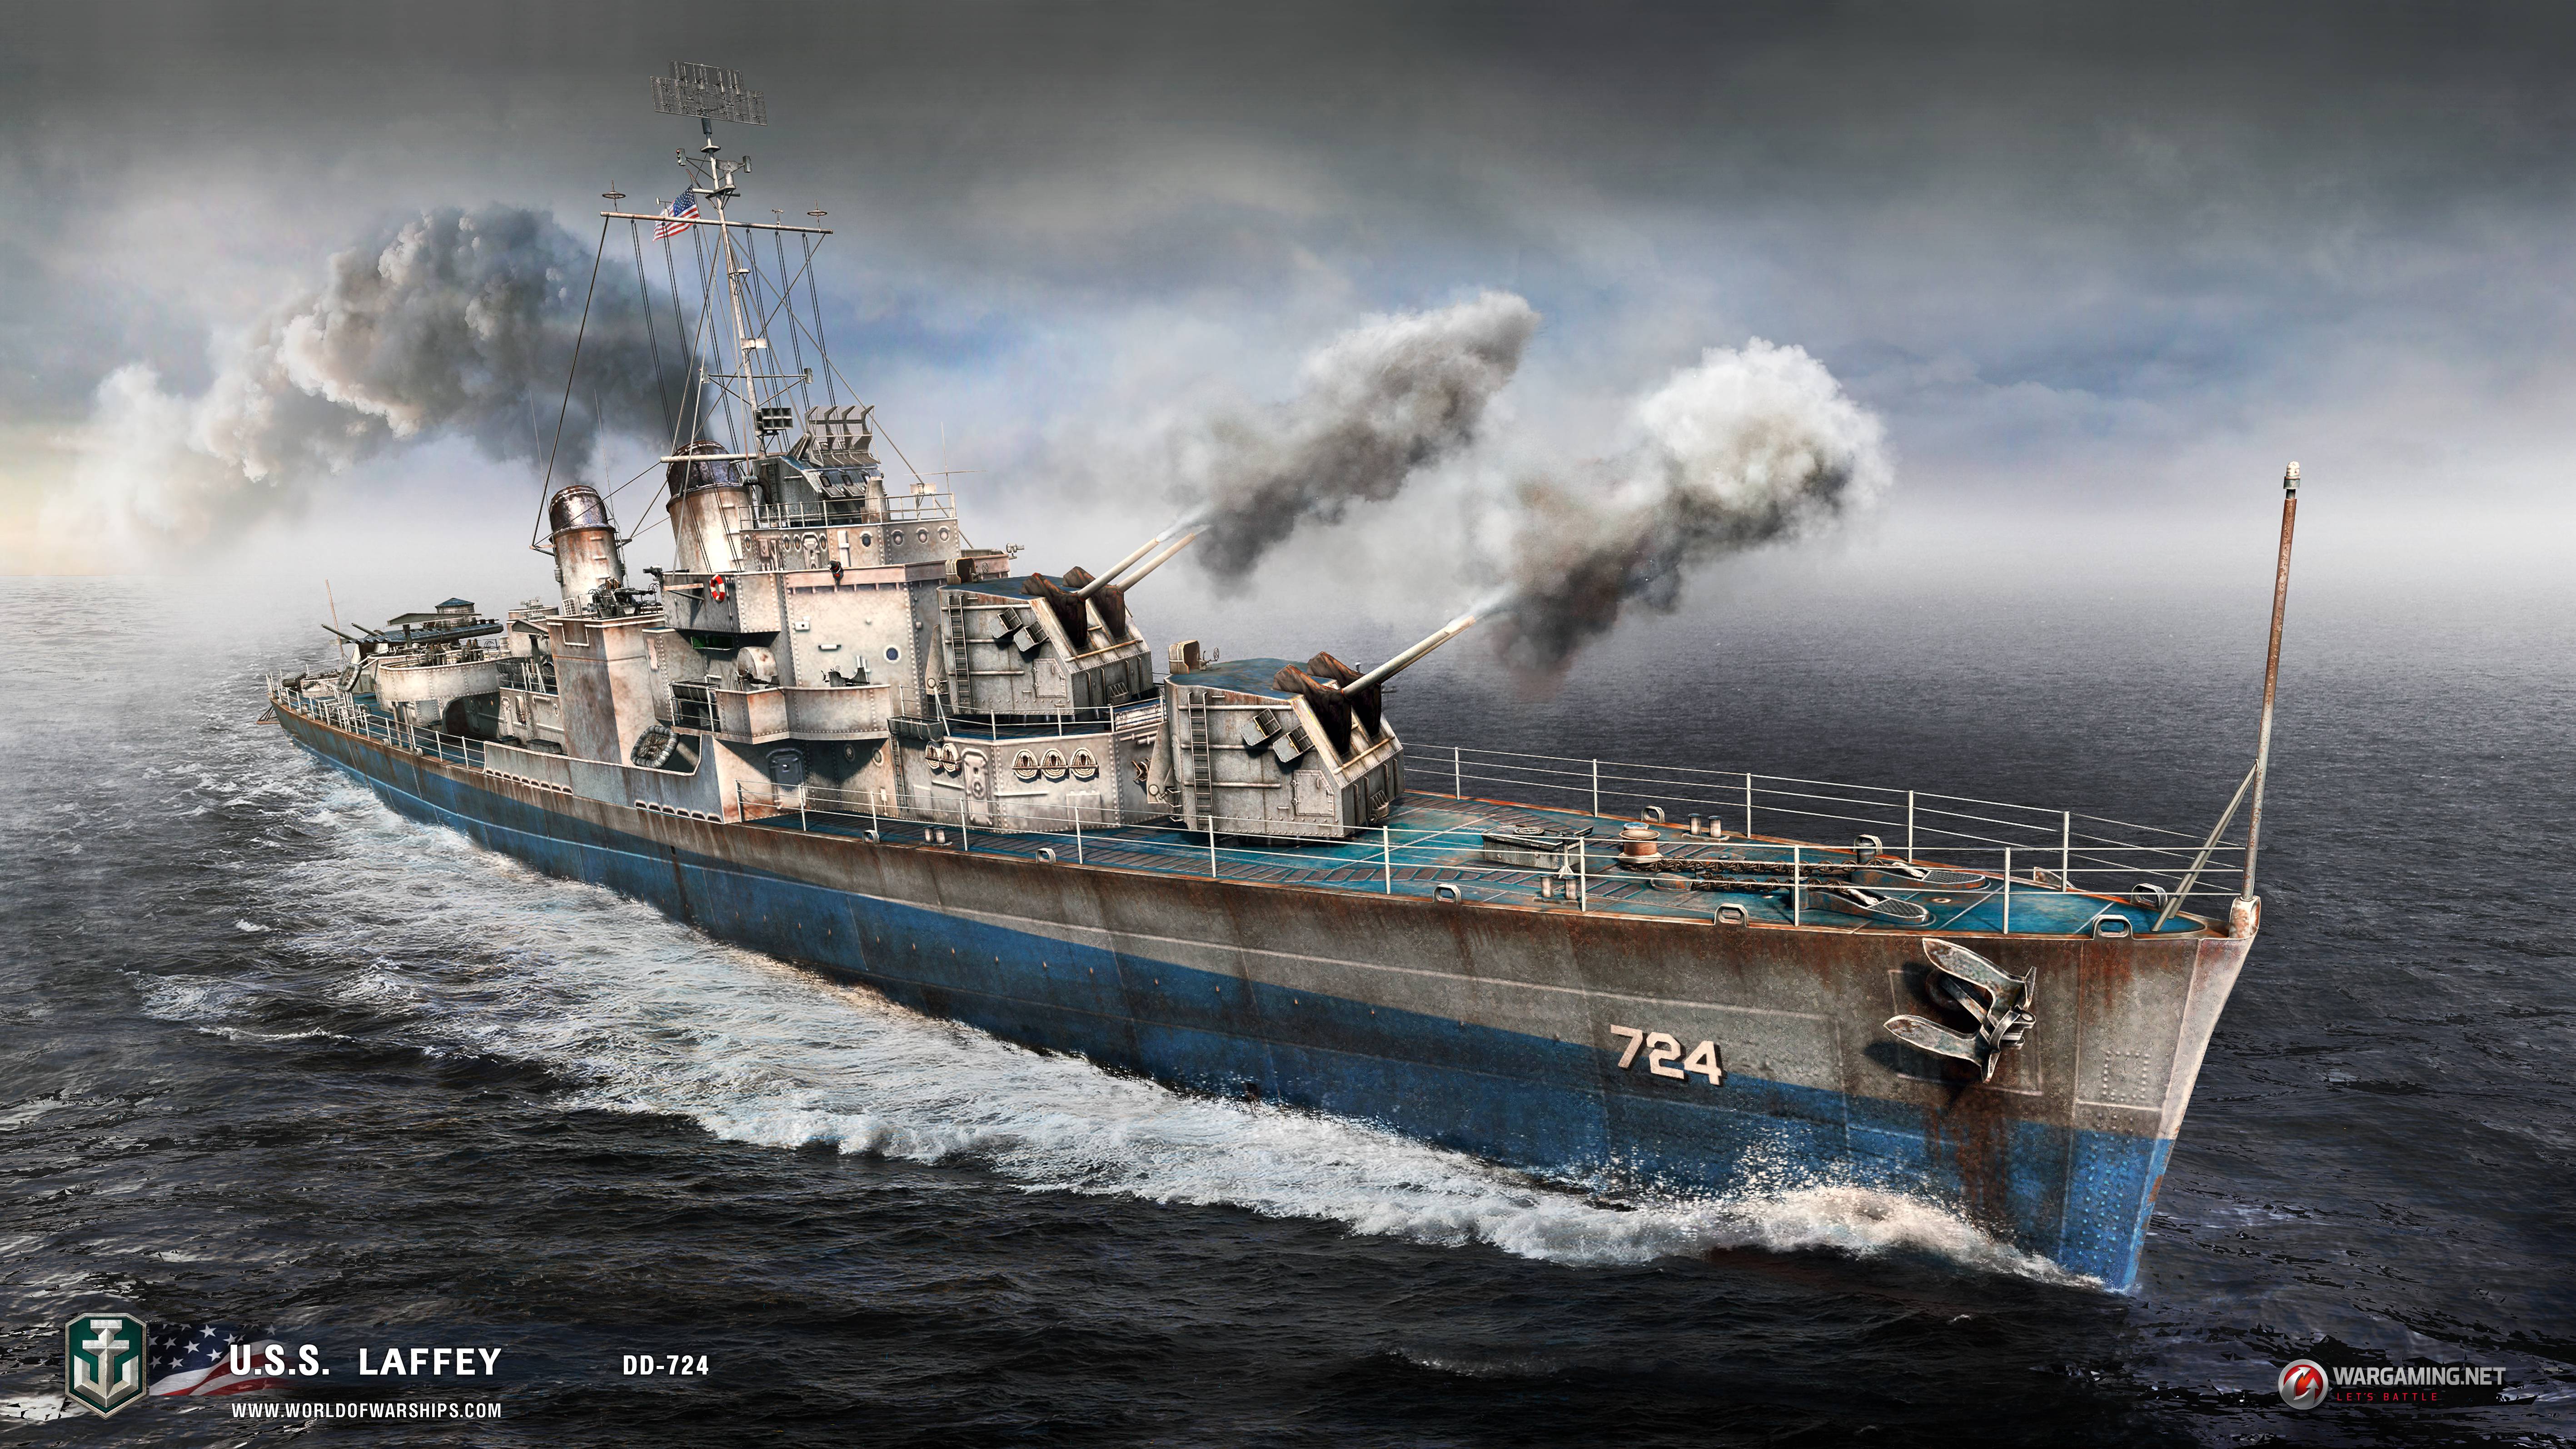 world class wallpaper,vehicle,ship,boat,warship,naval ship